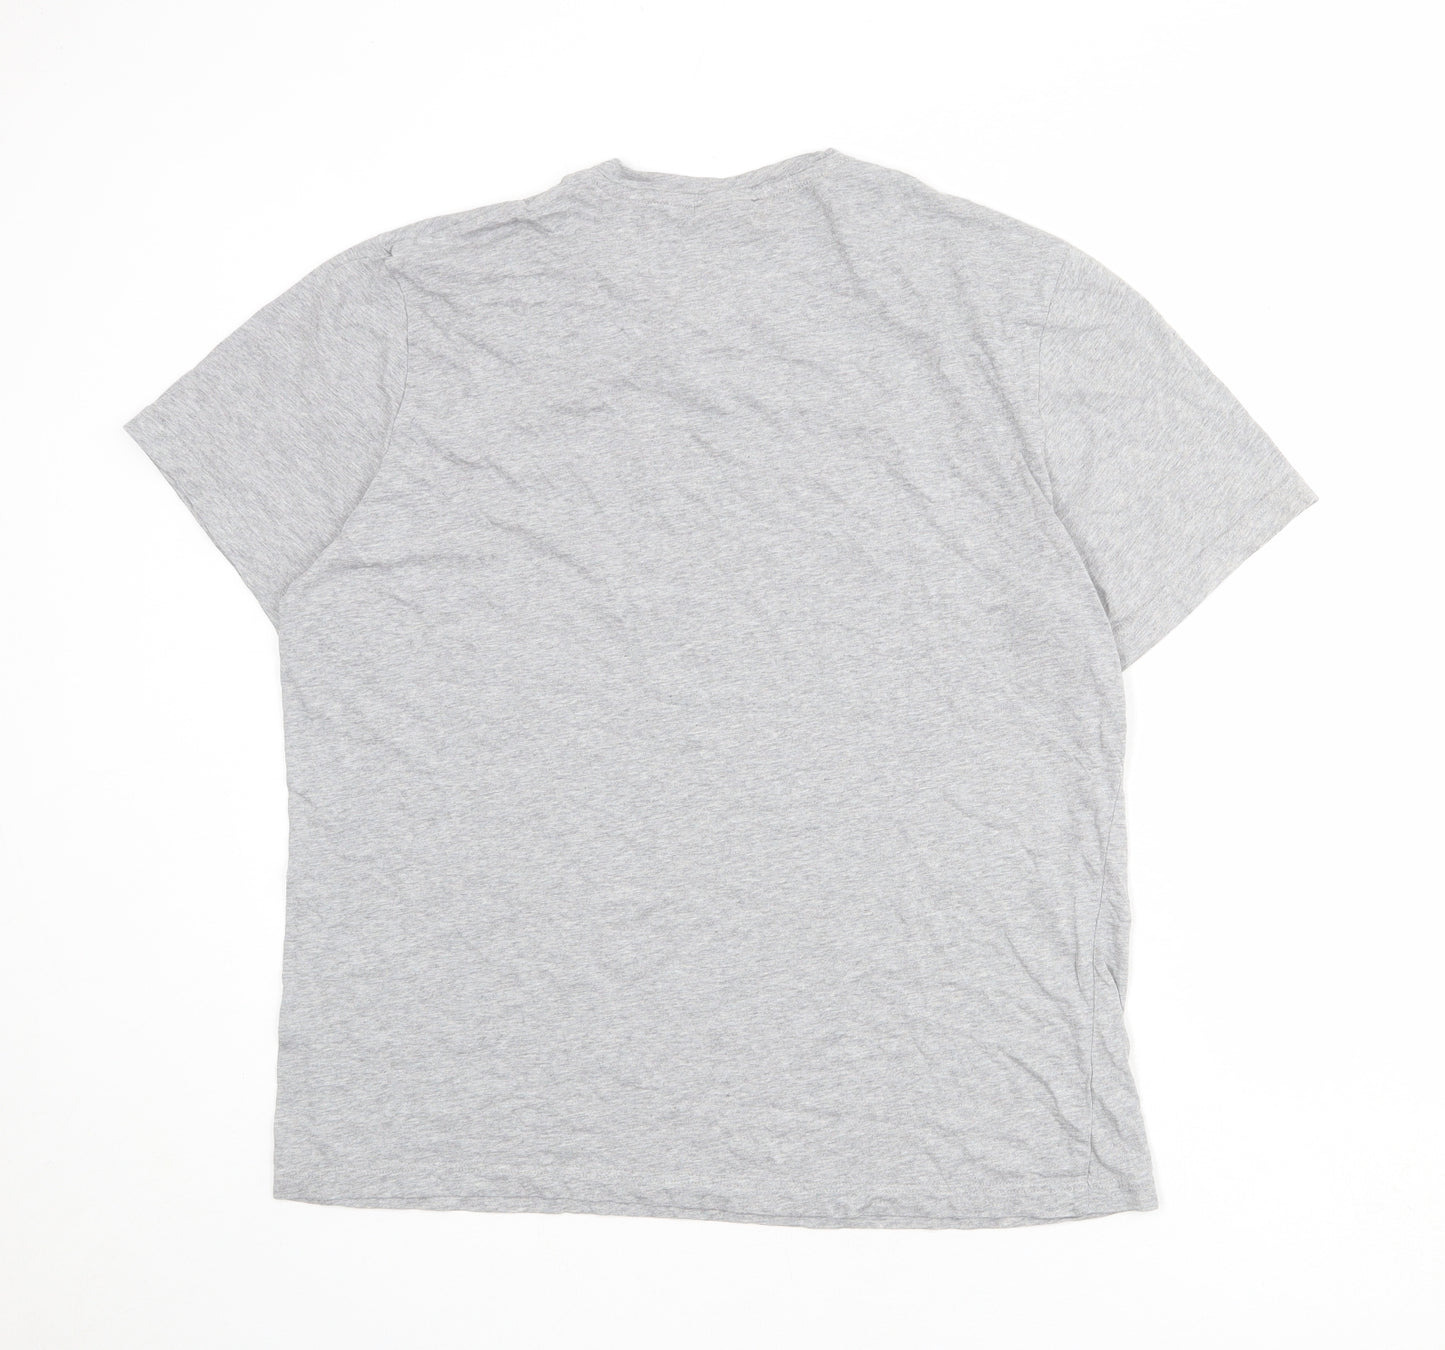 Reebok Mens Grey Cotton T-Shirt Size XL Round Neck